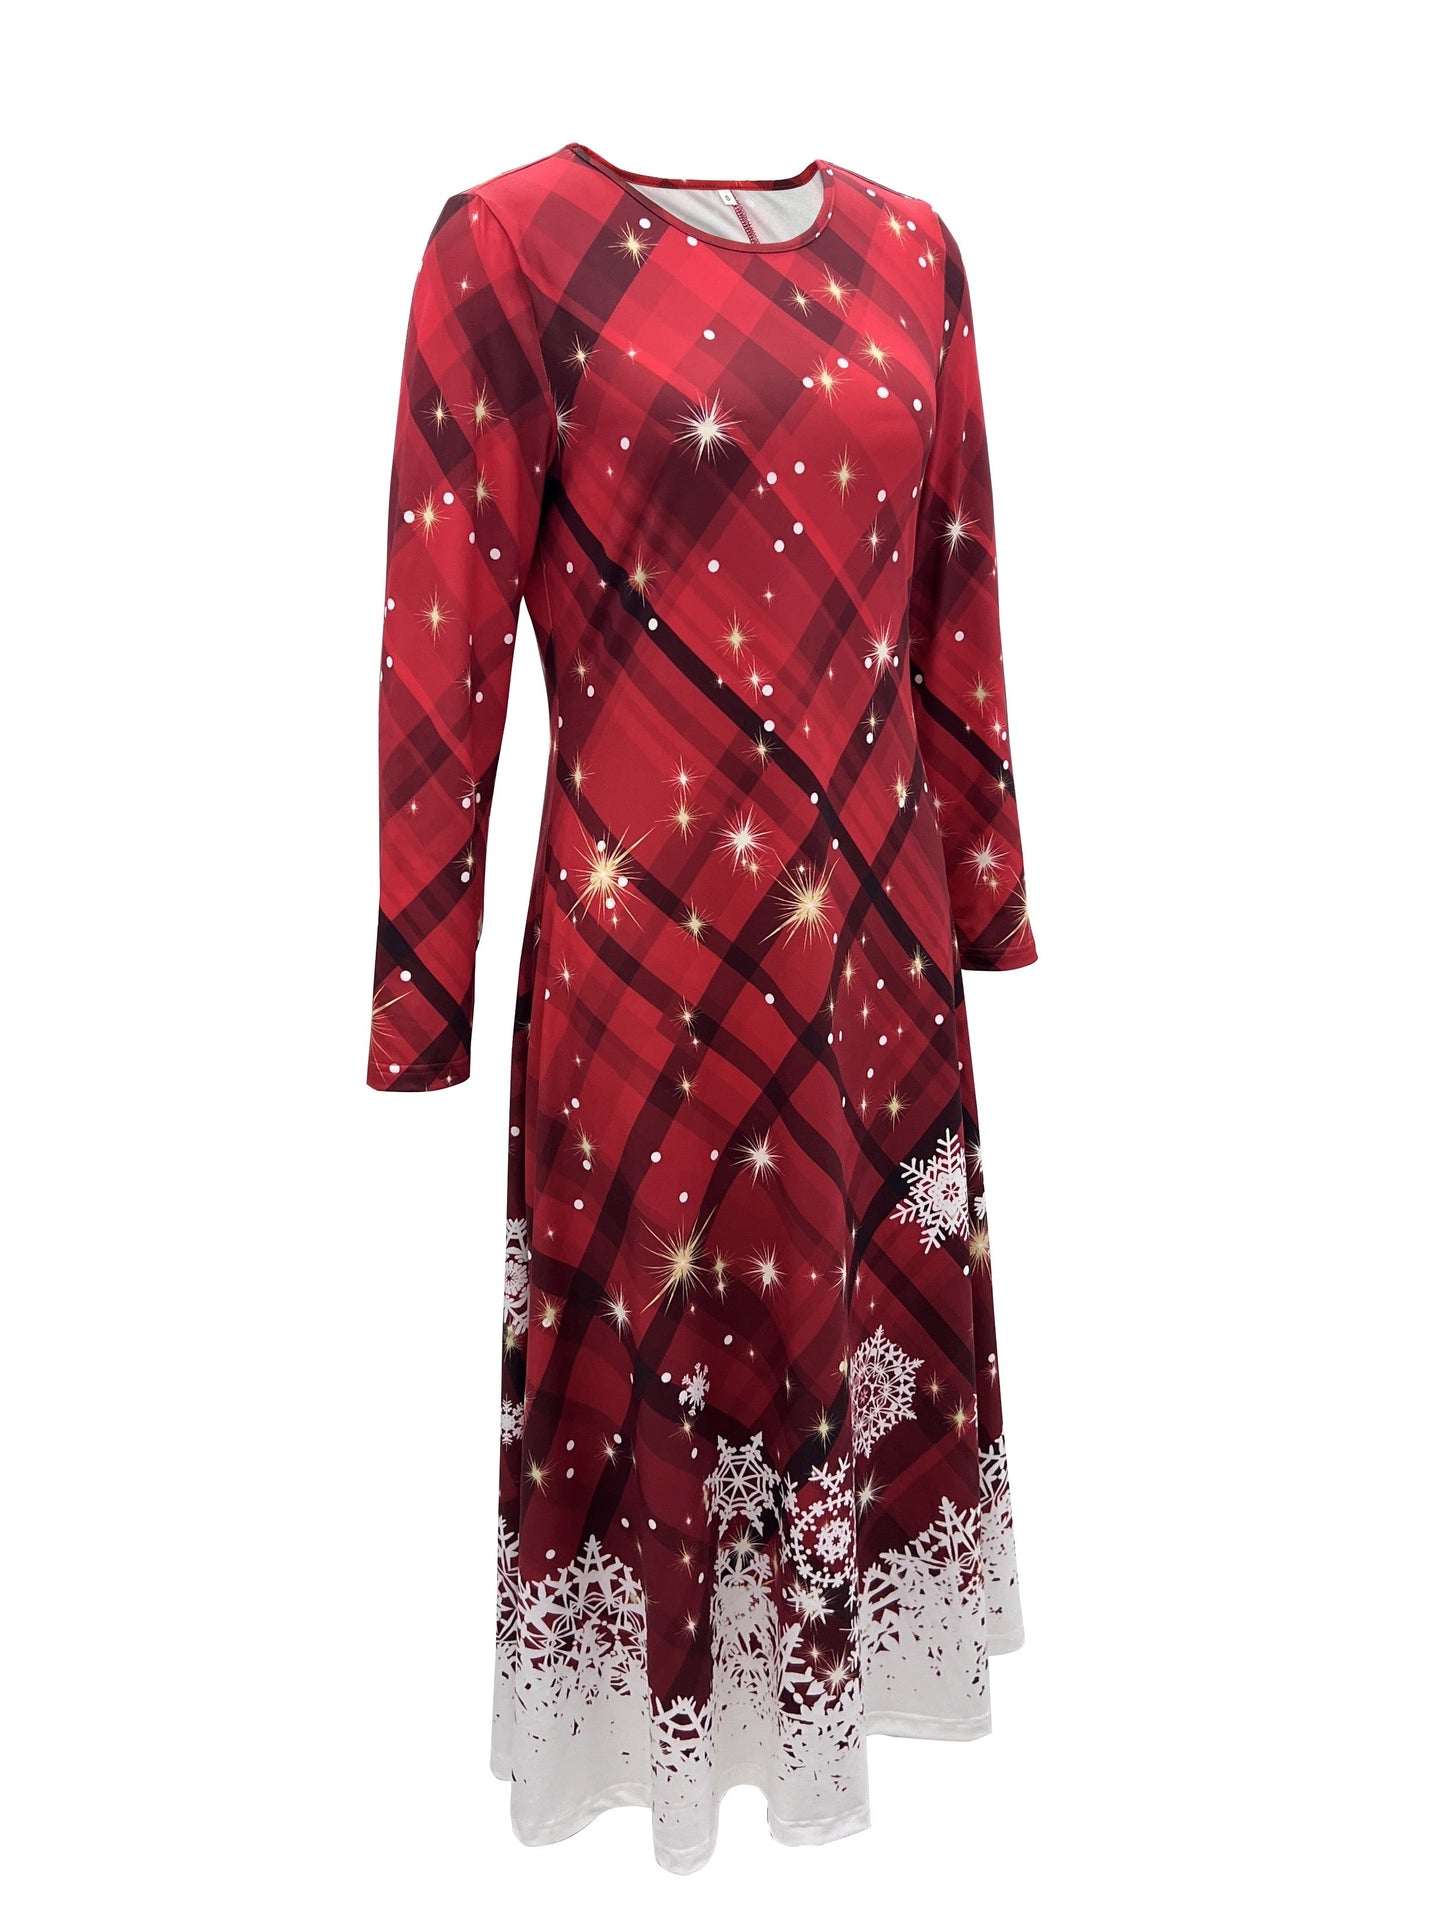 Christmas Graphic Print Dress, Casual Long Sleeve Crew Neck Dress, Women's Clothing